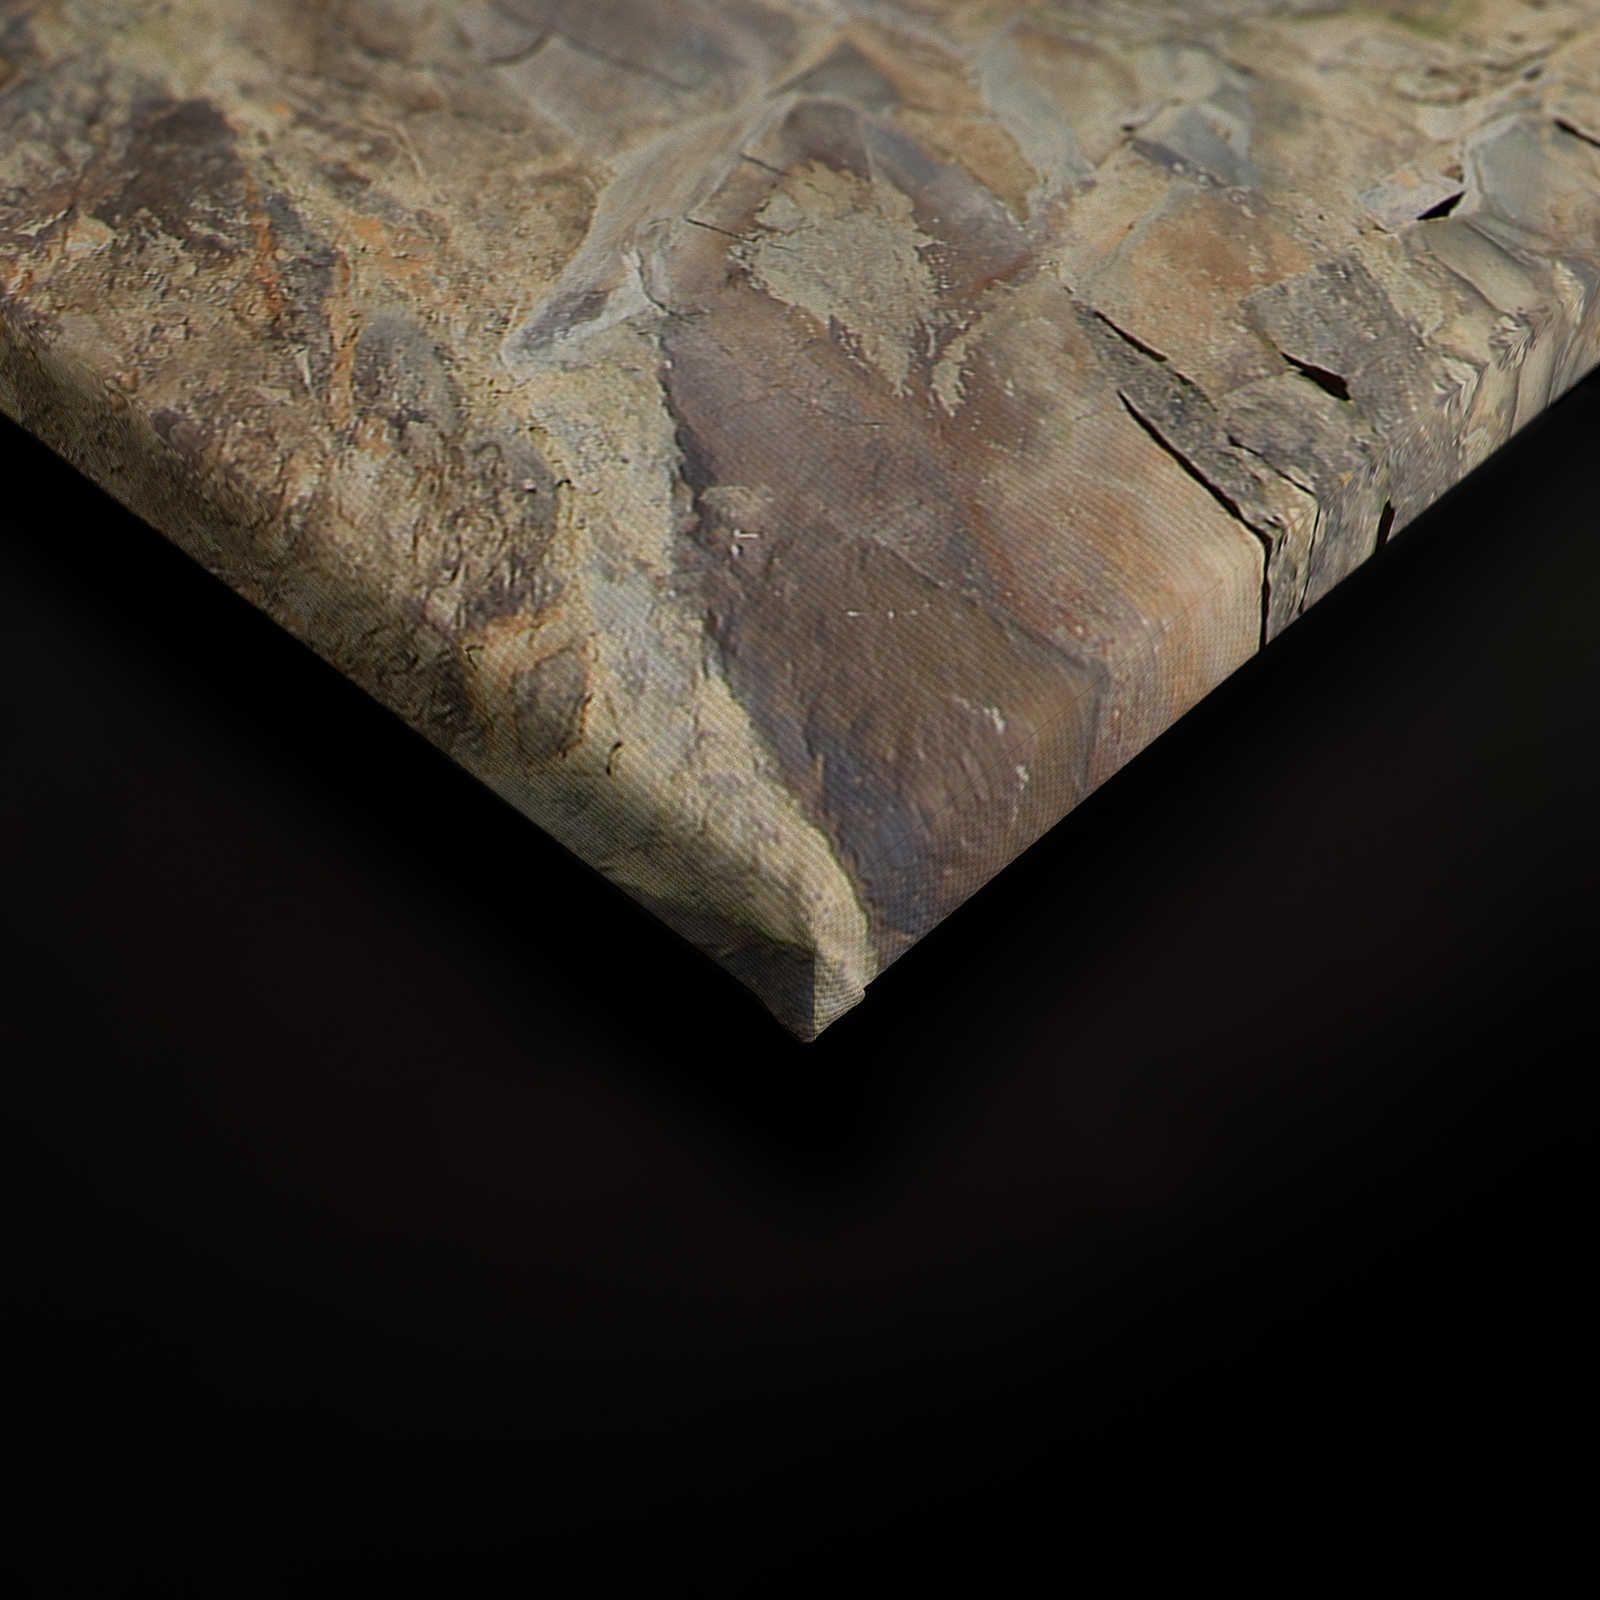             Pittura su tela effetto pietra 3D, parete in pietra naturale - 0,90 m x 0,60 m
        